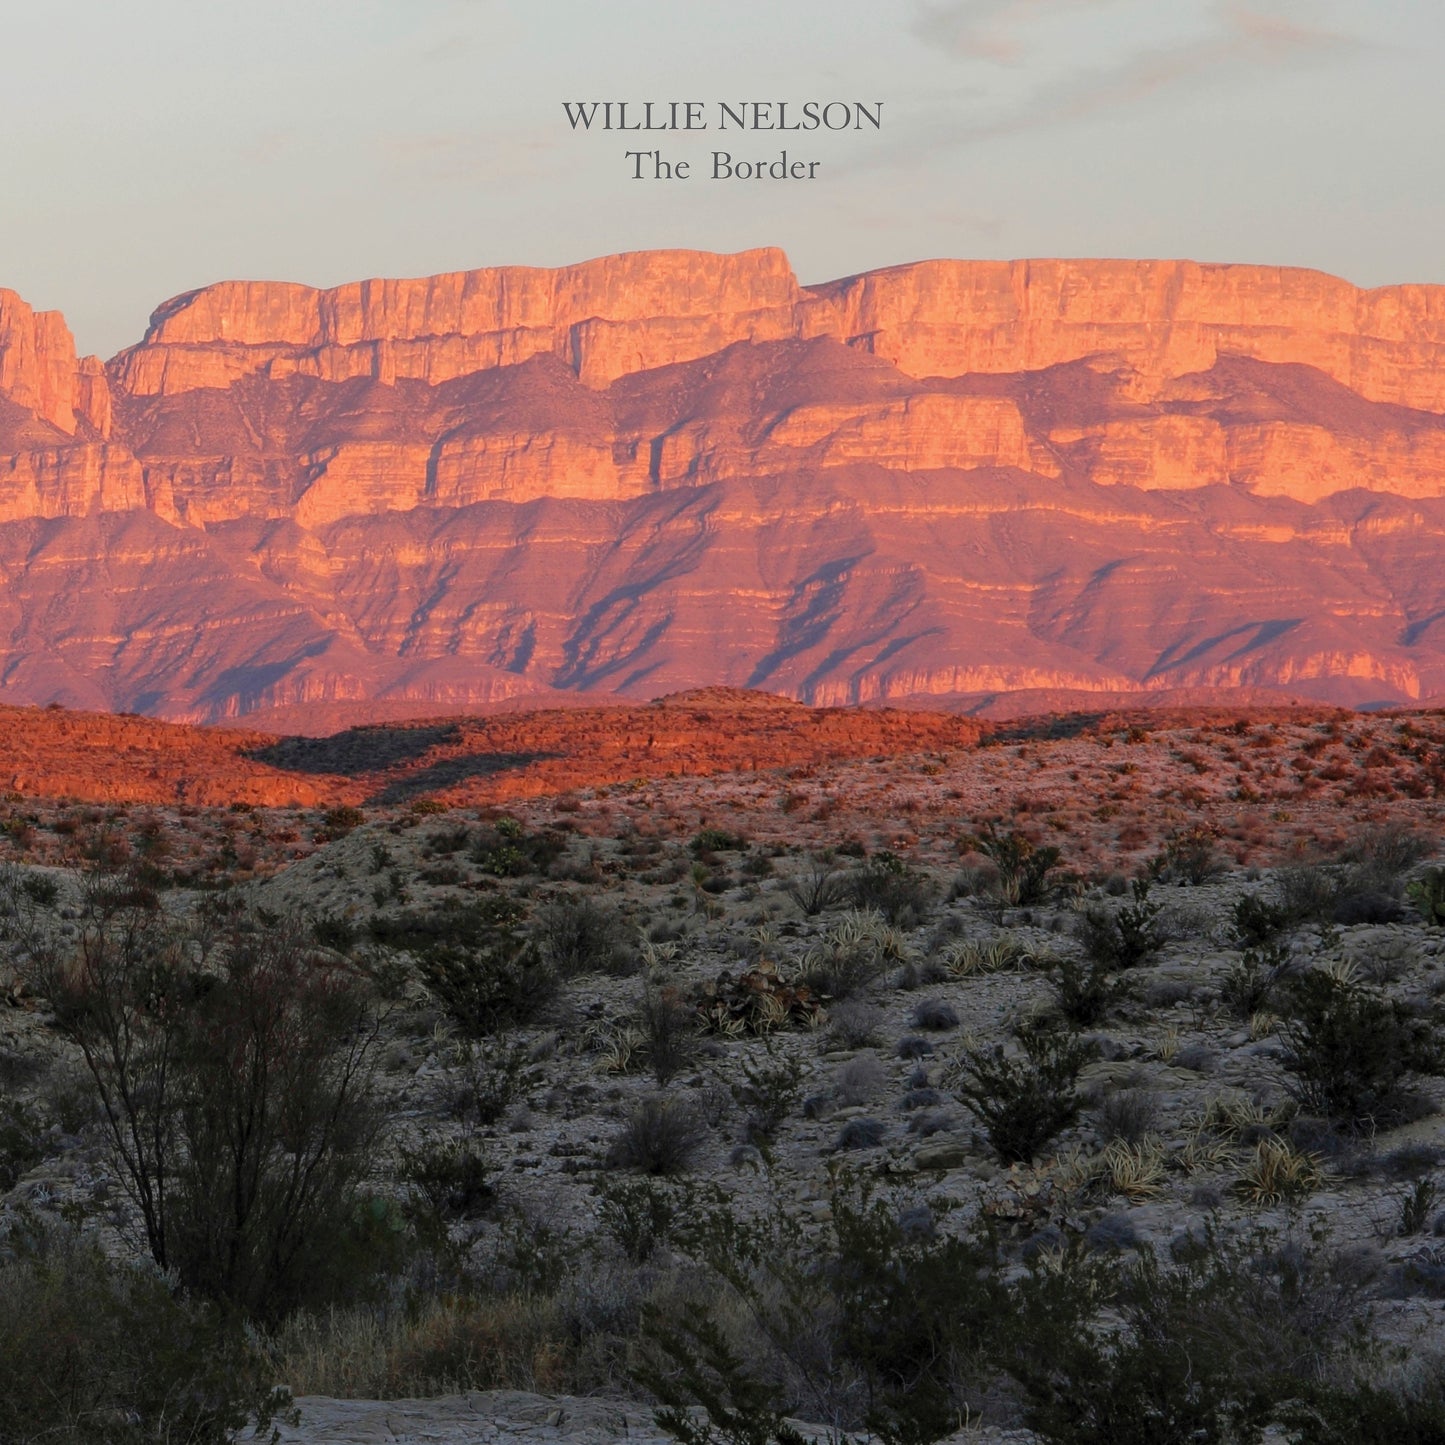 Willie Nelson, "The Border"